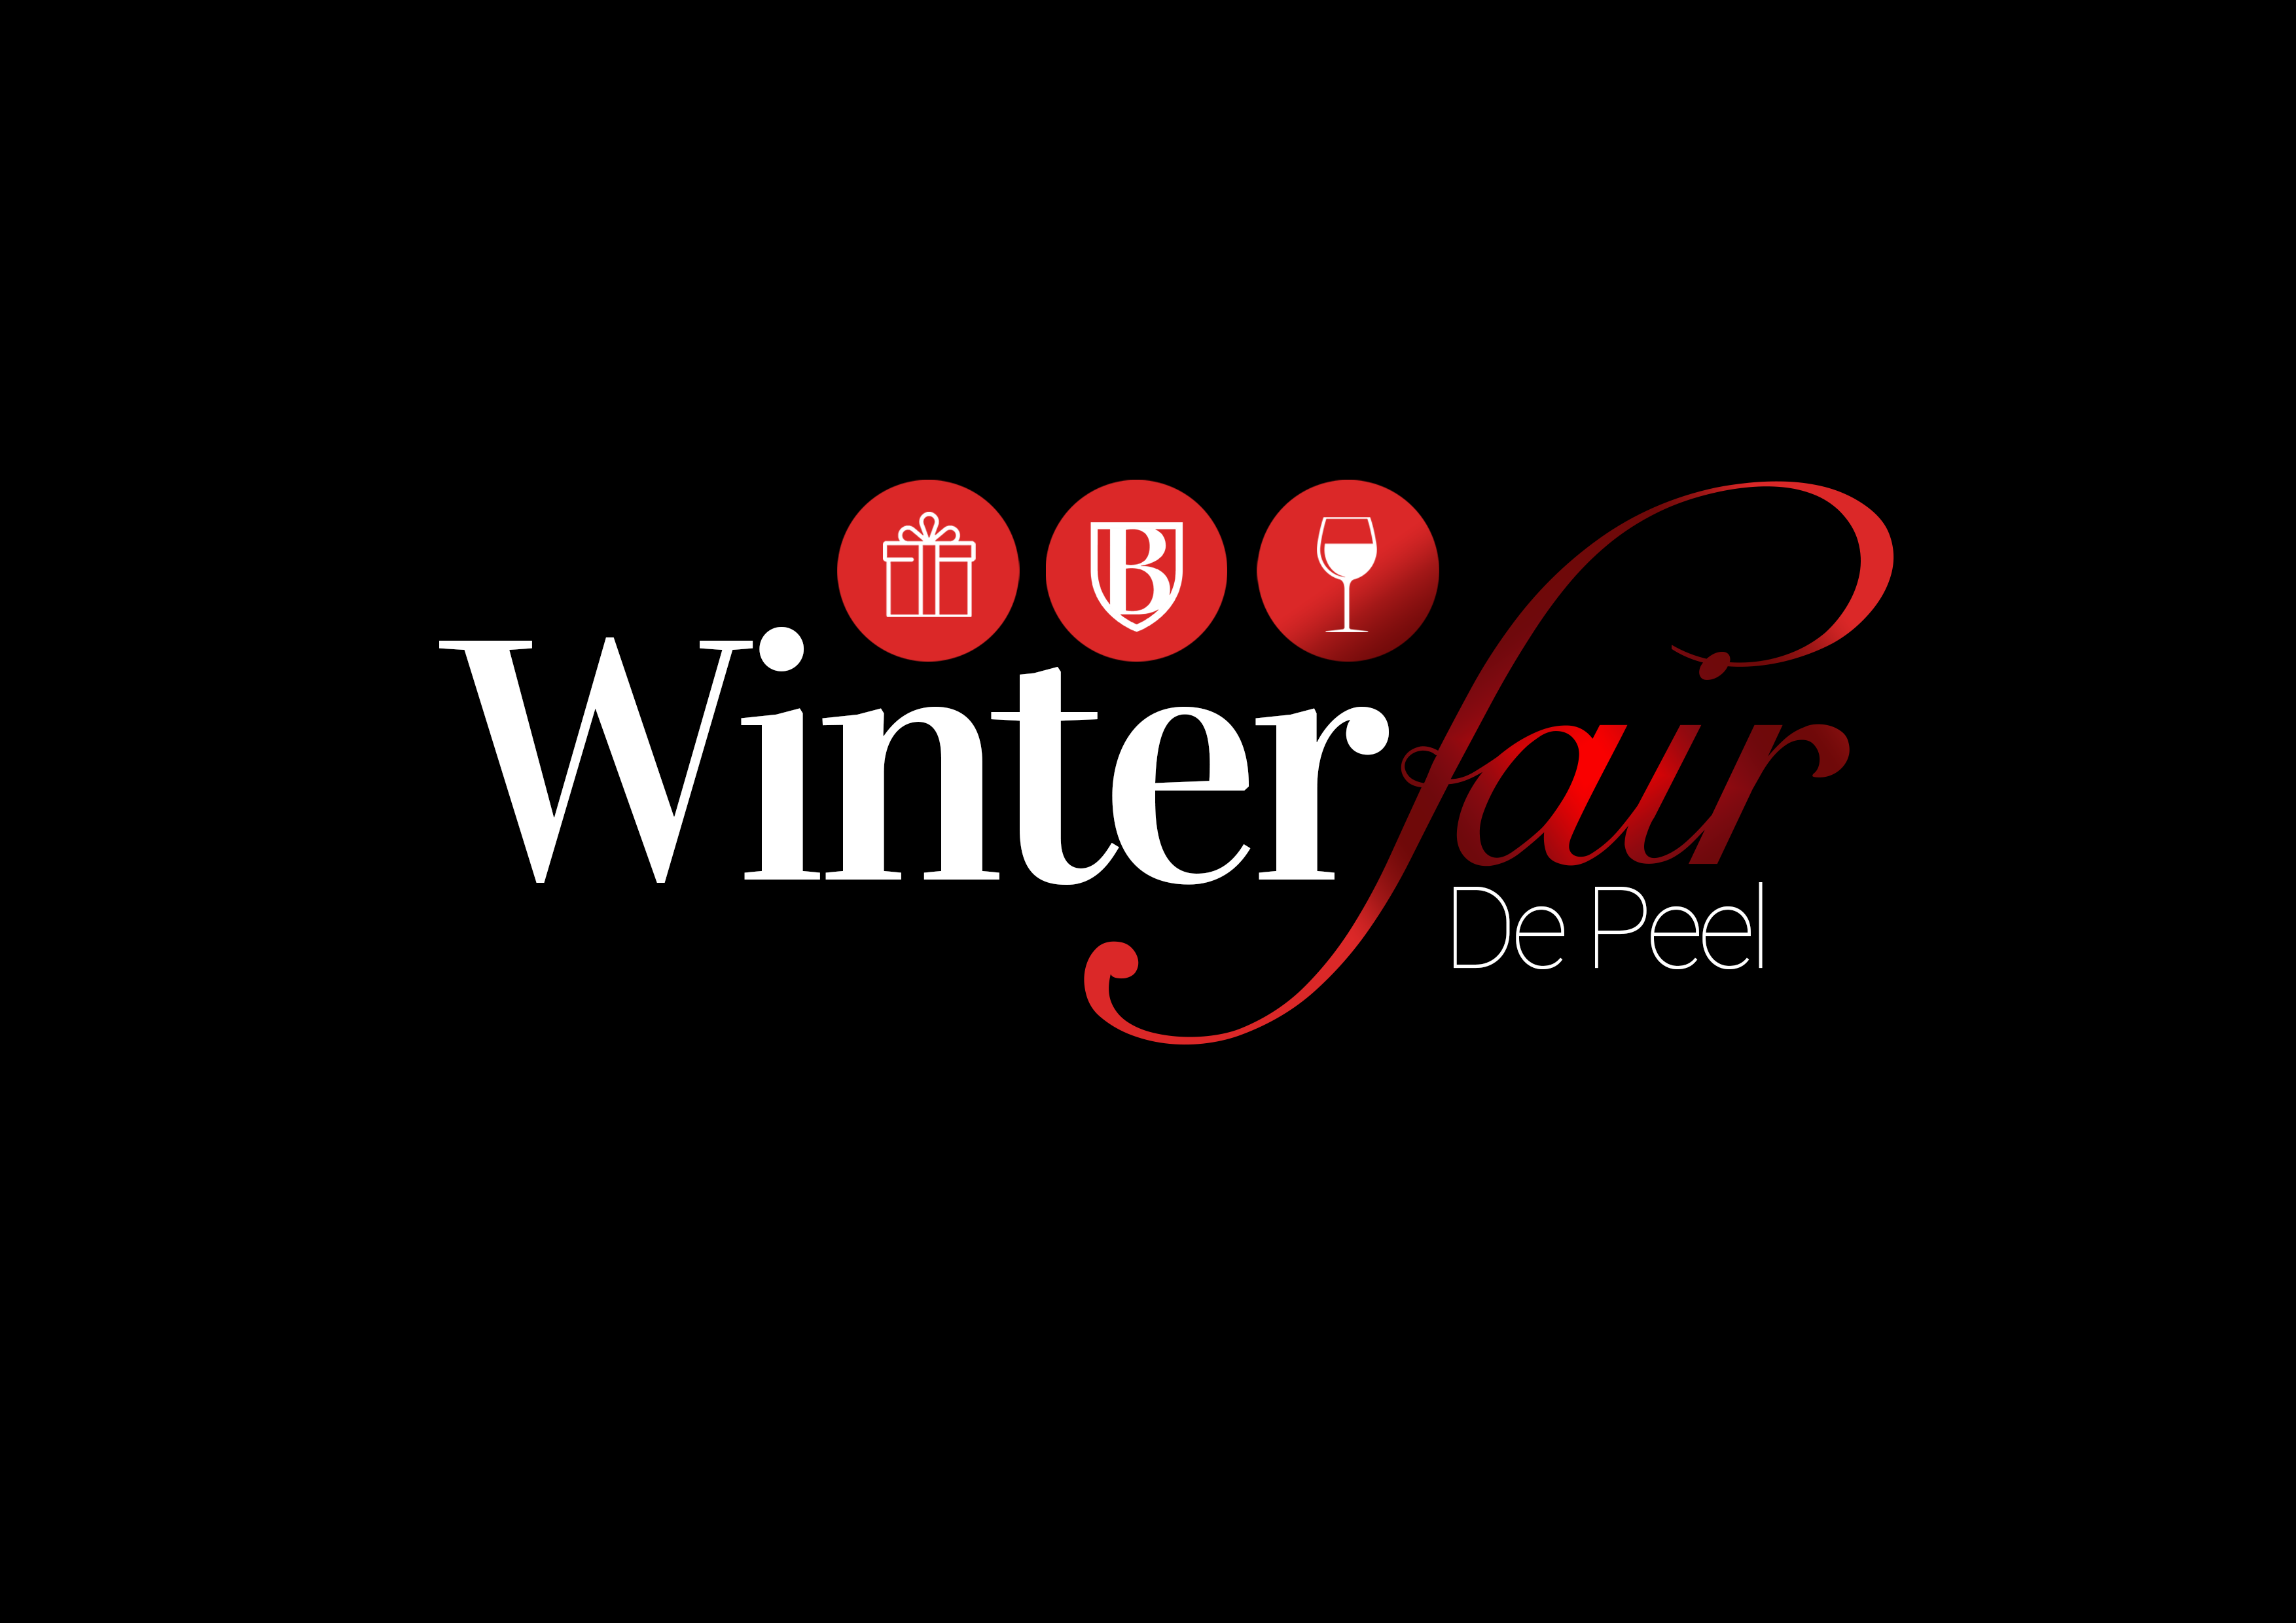 Winterfair De Peel